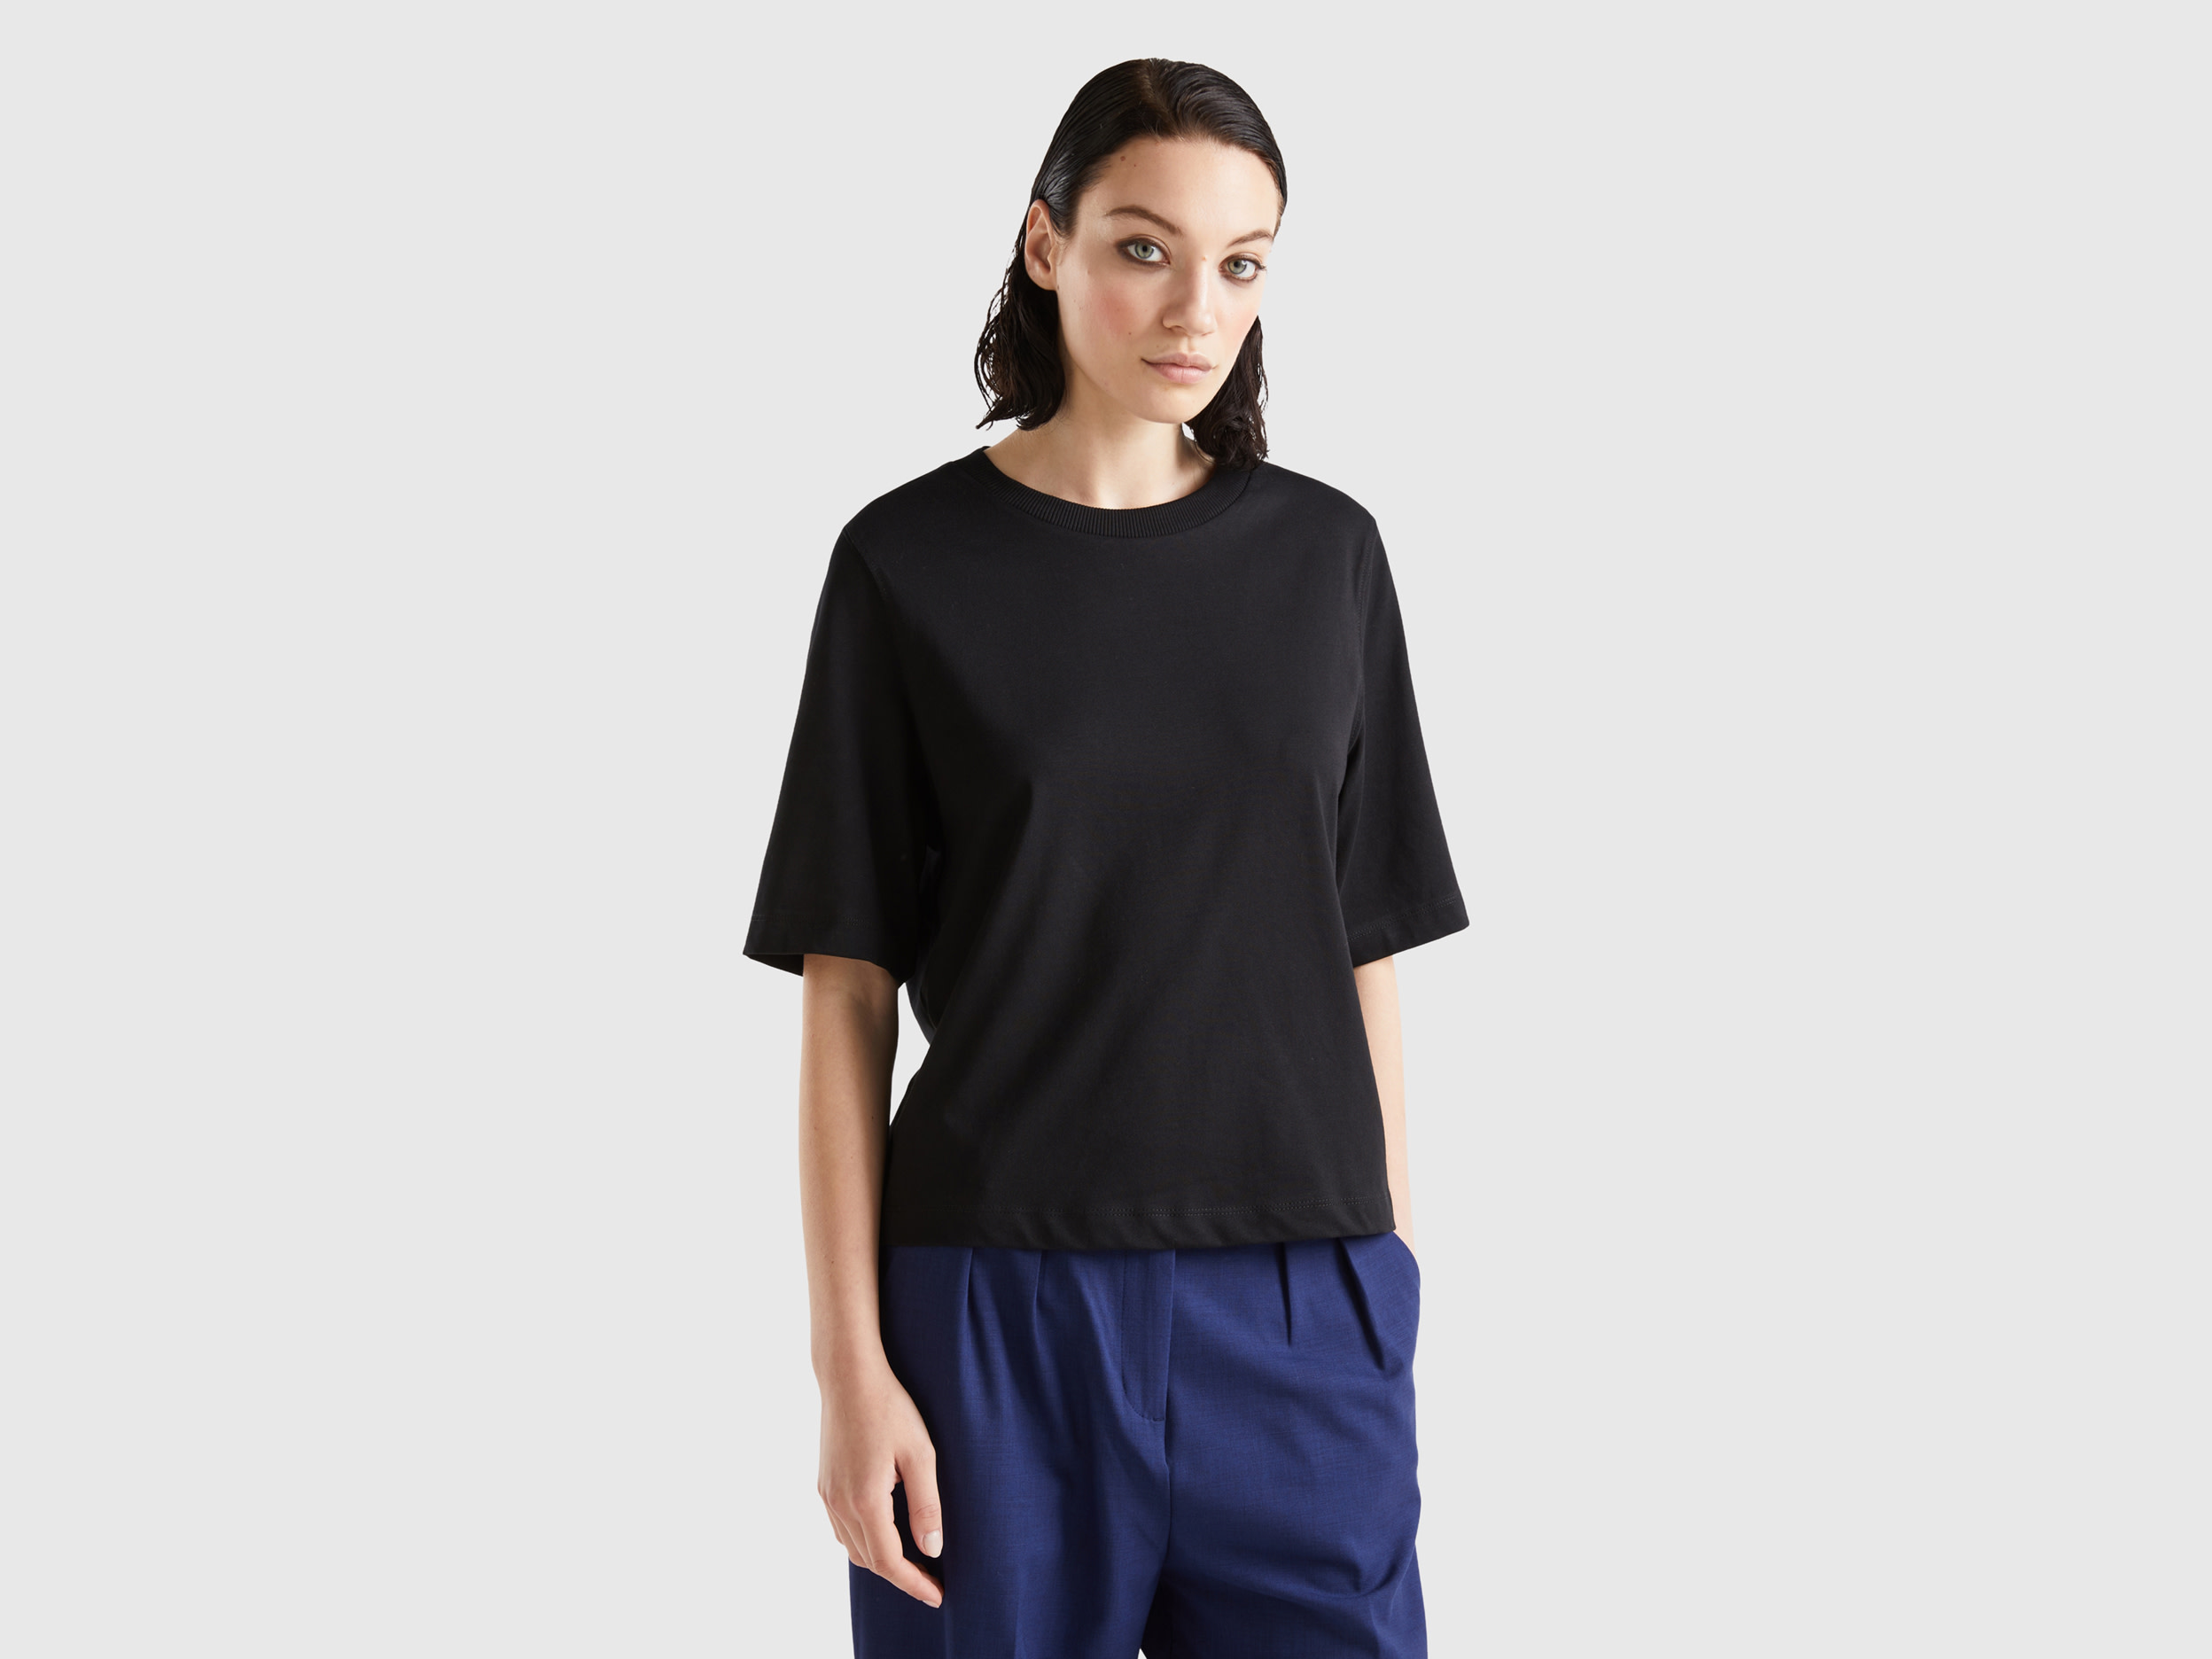 Benetton, 100% Cotton Boxy Fit T-shirt, size XS, Black, Women